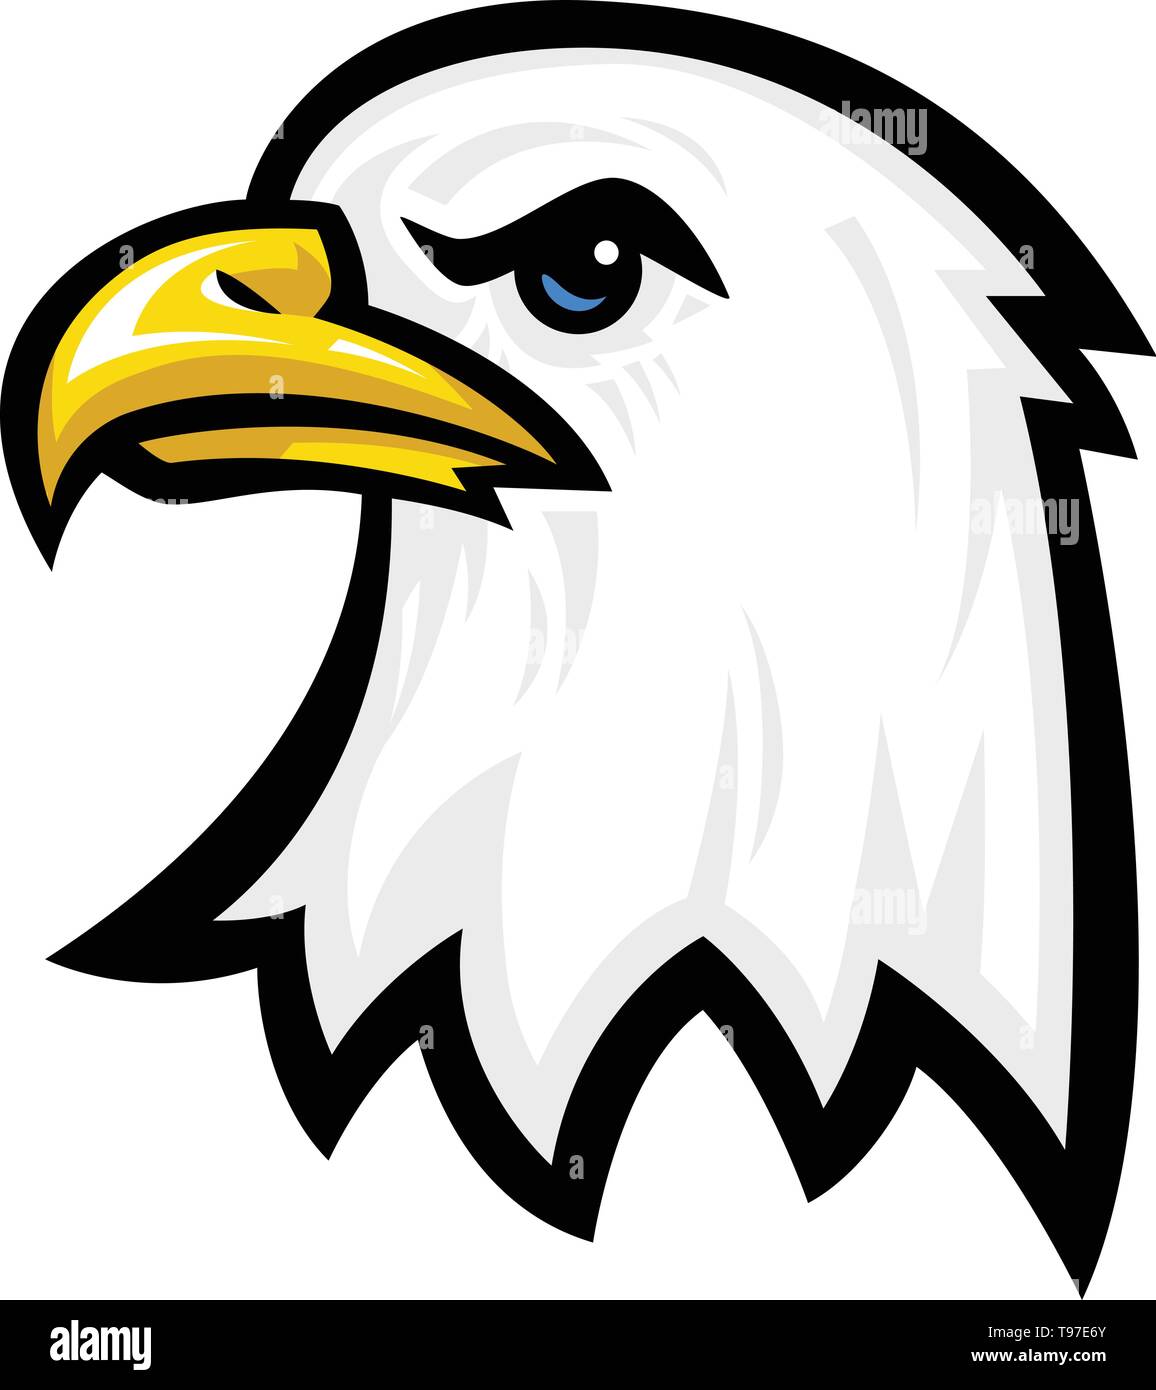 águila de dibujos animados fotografías e imágenes de alta resolución - Alamy